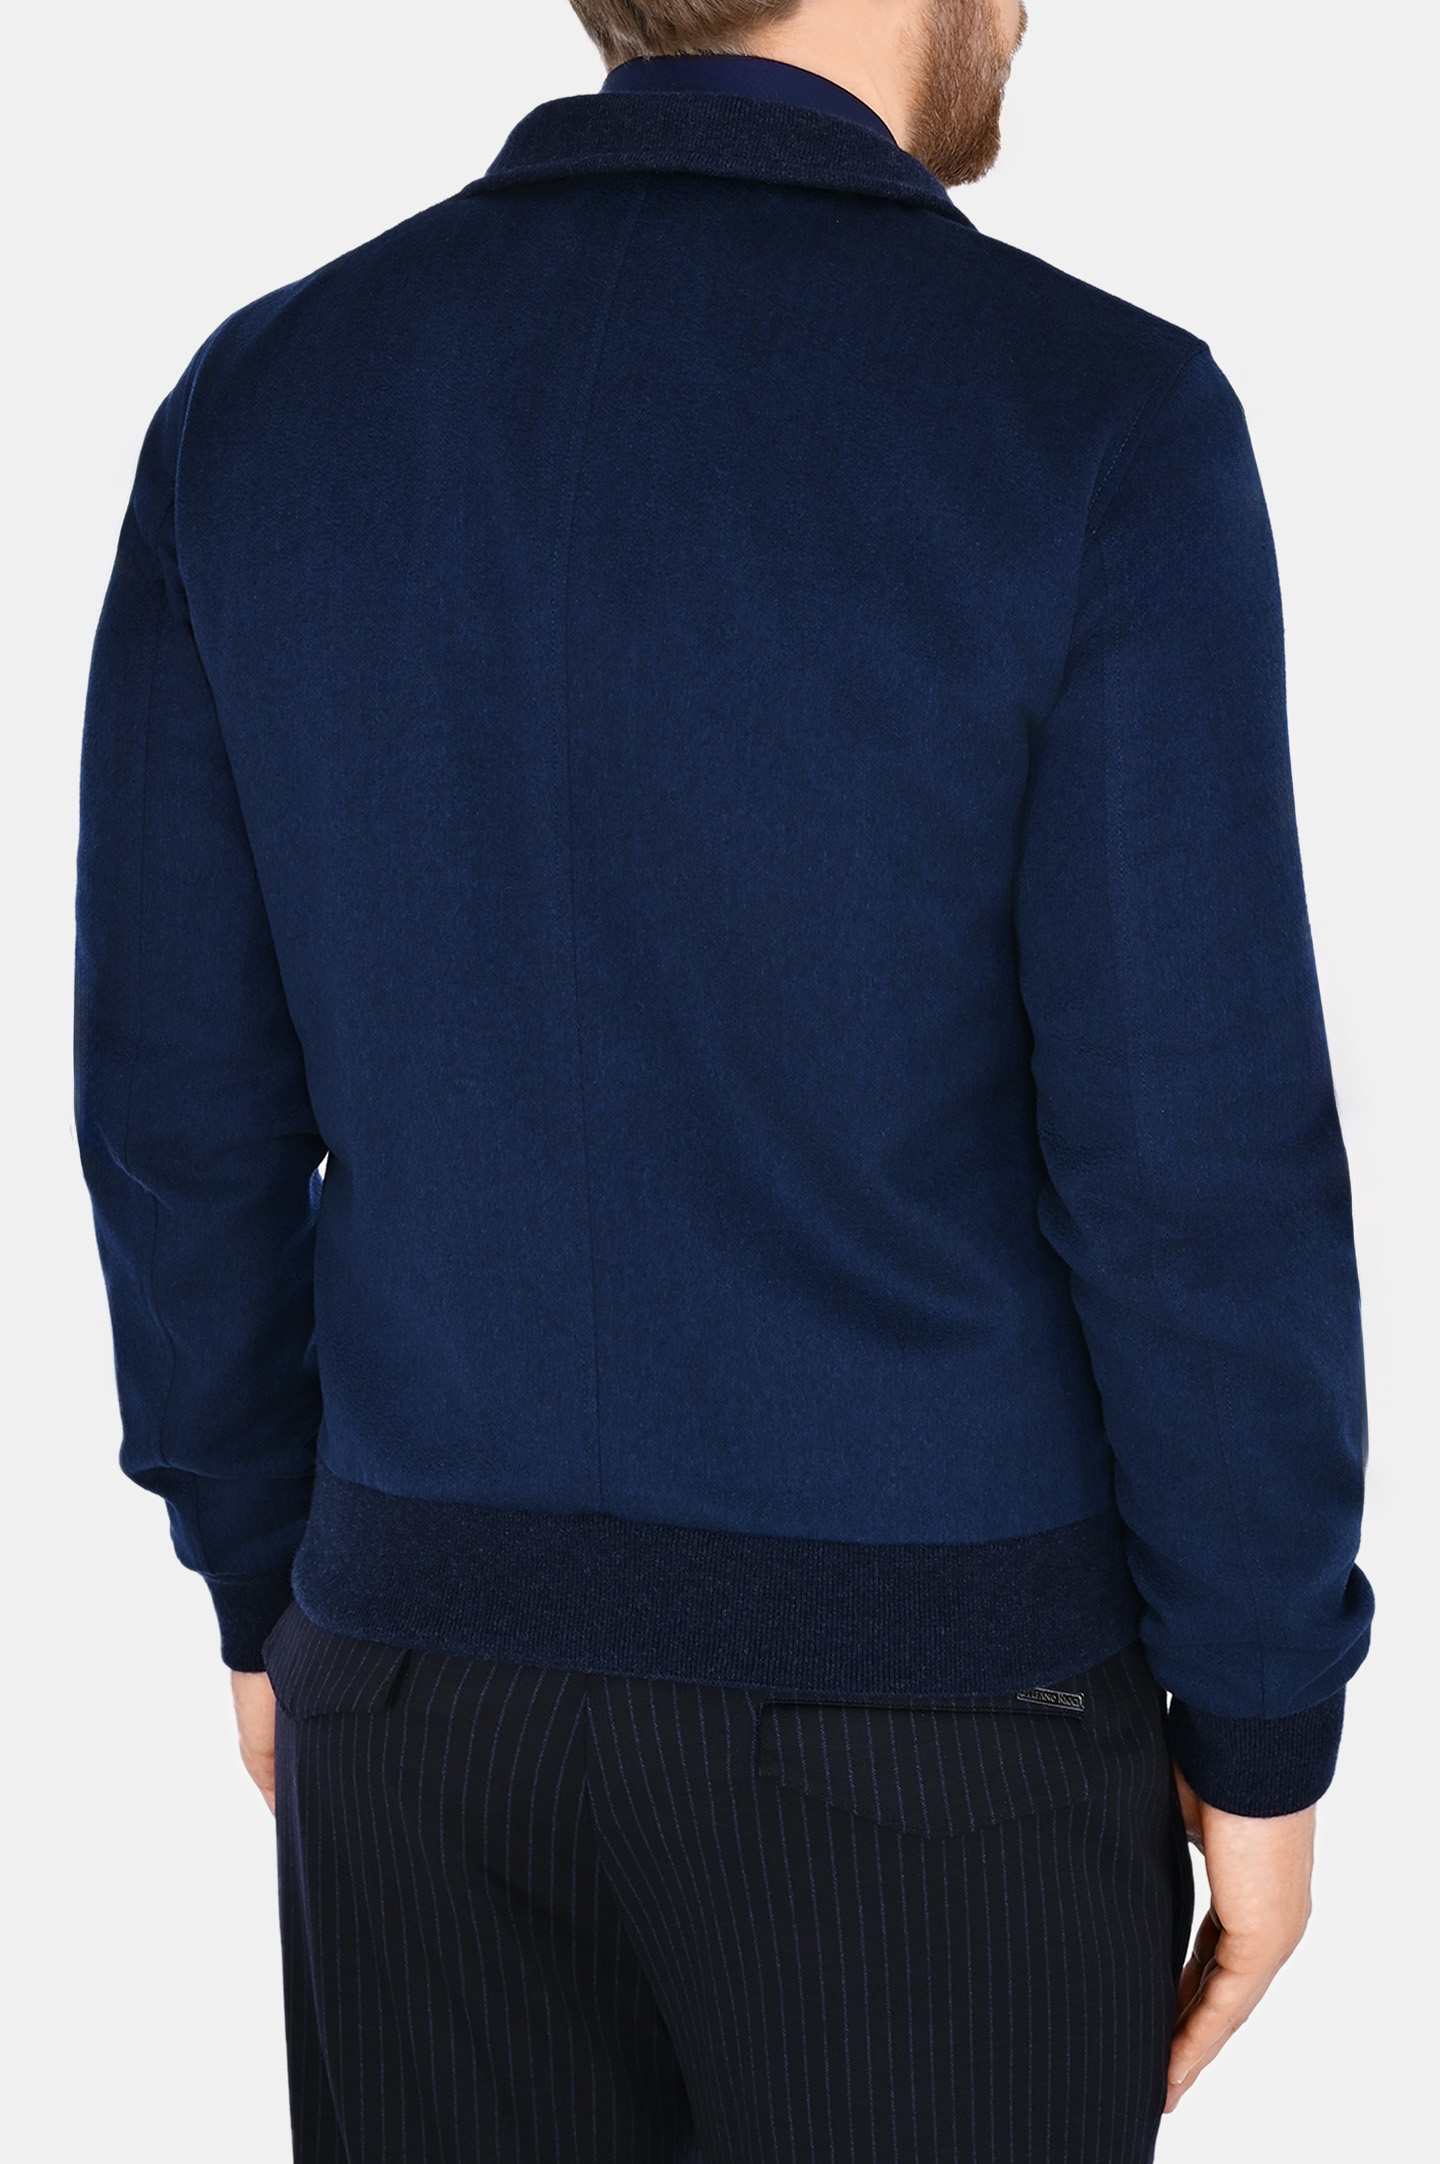 Куртка STEFANO RICCI MDJ3300090 CO66HC, цвет: Темно-синий, Мужской